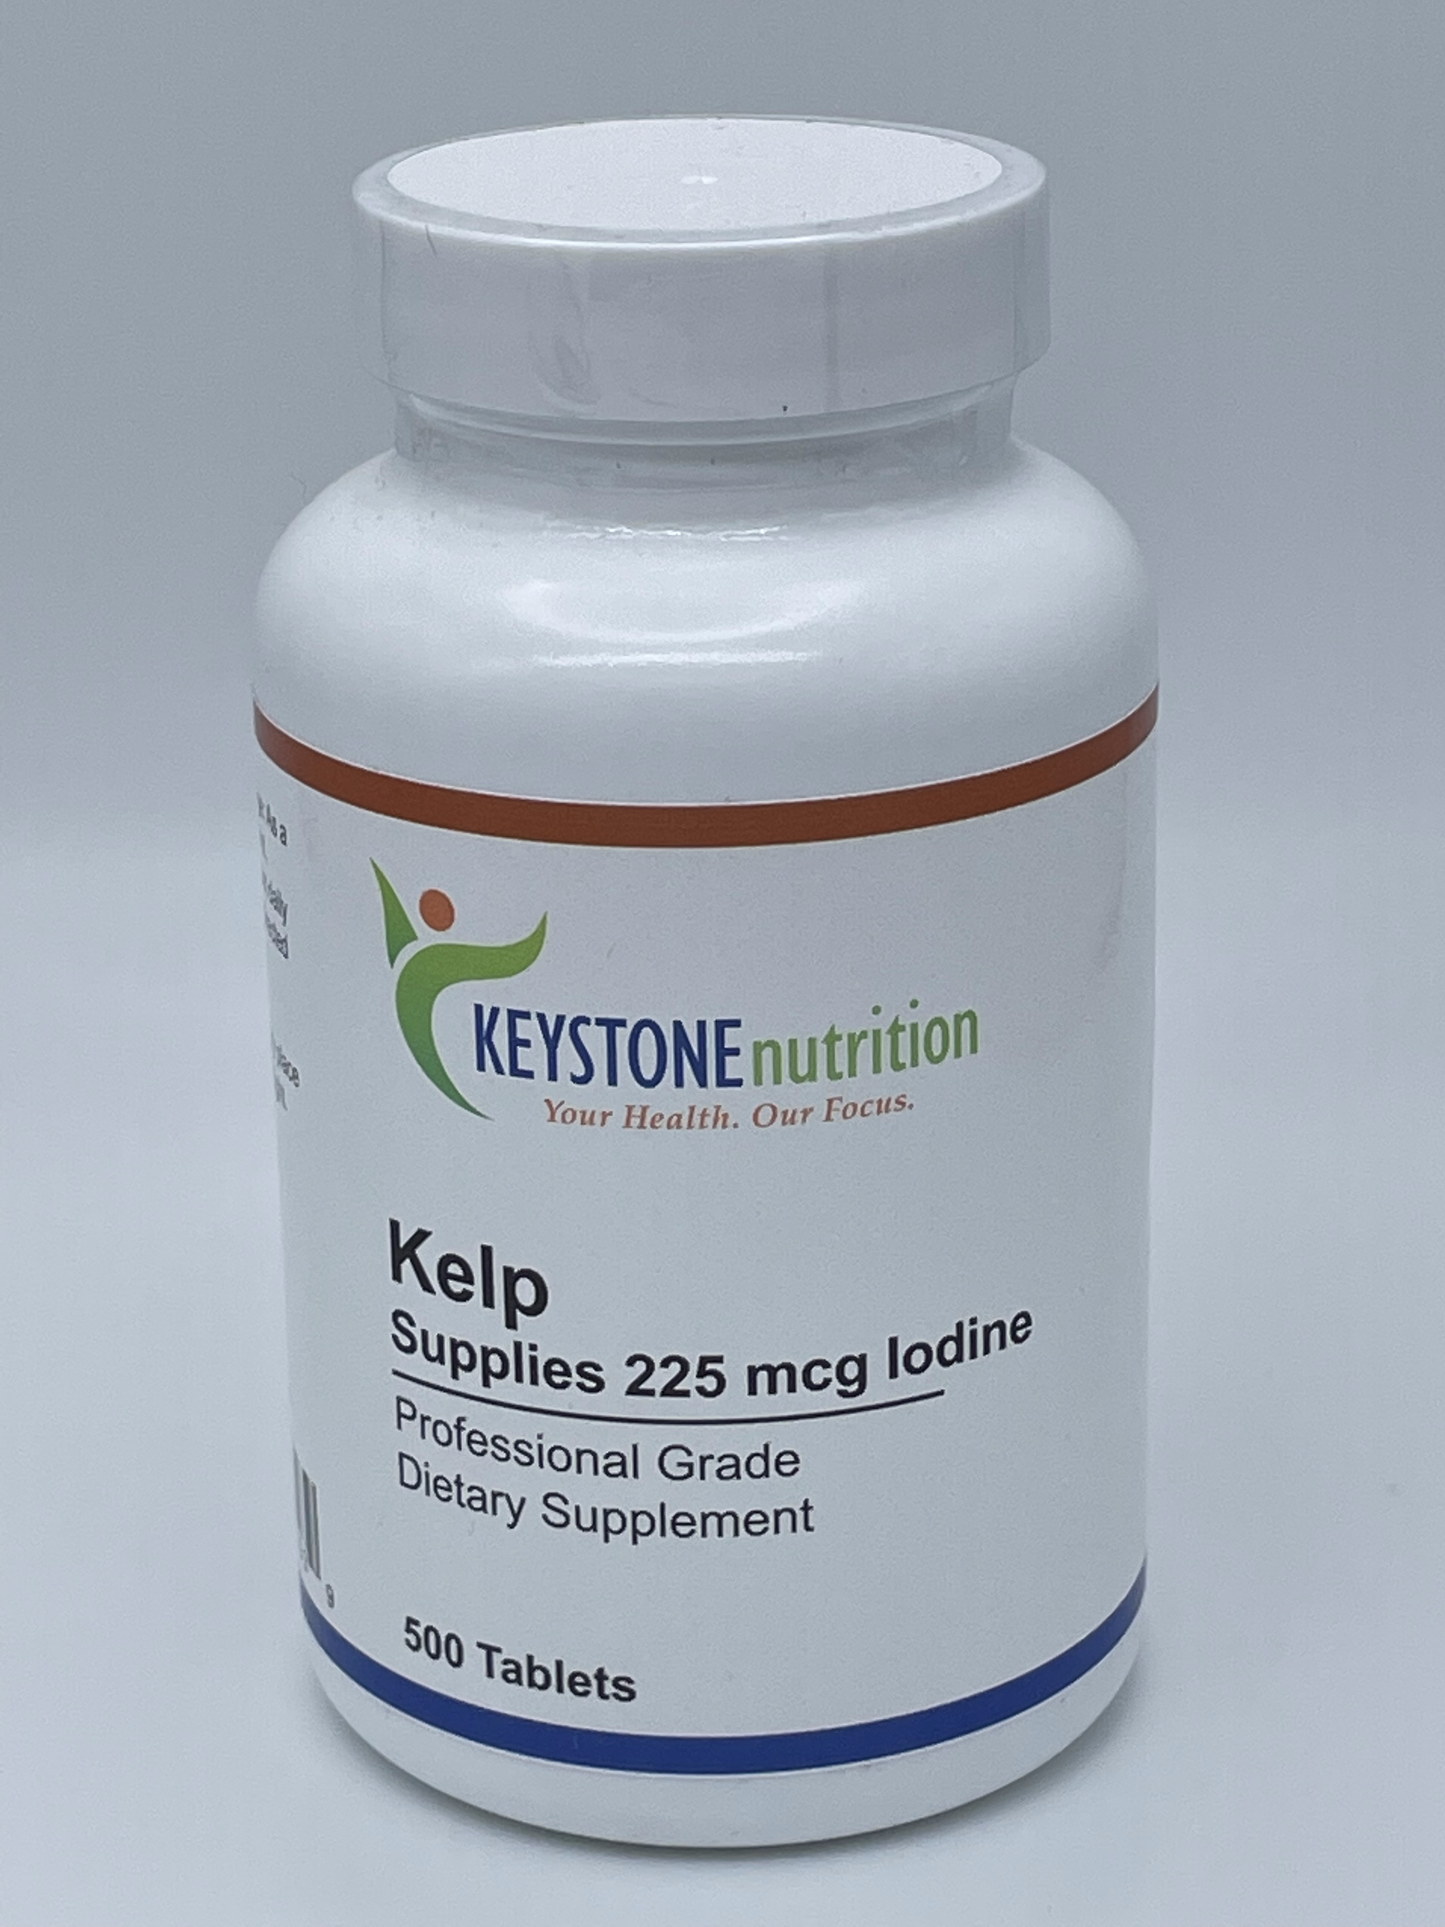 Kelp / Supplies 225 mcg Iodine